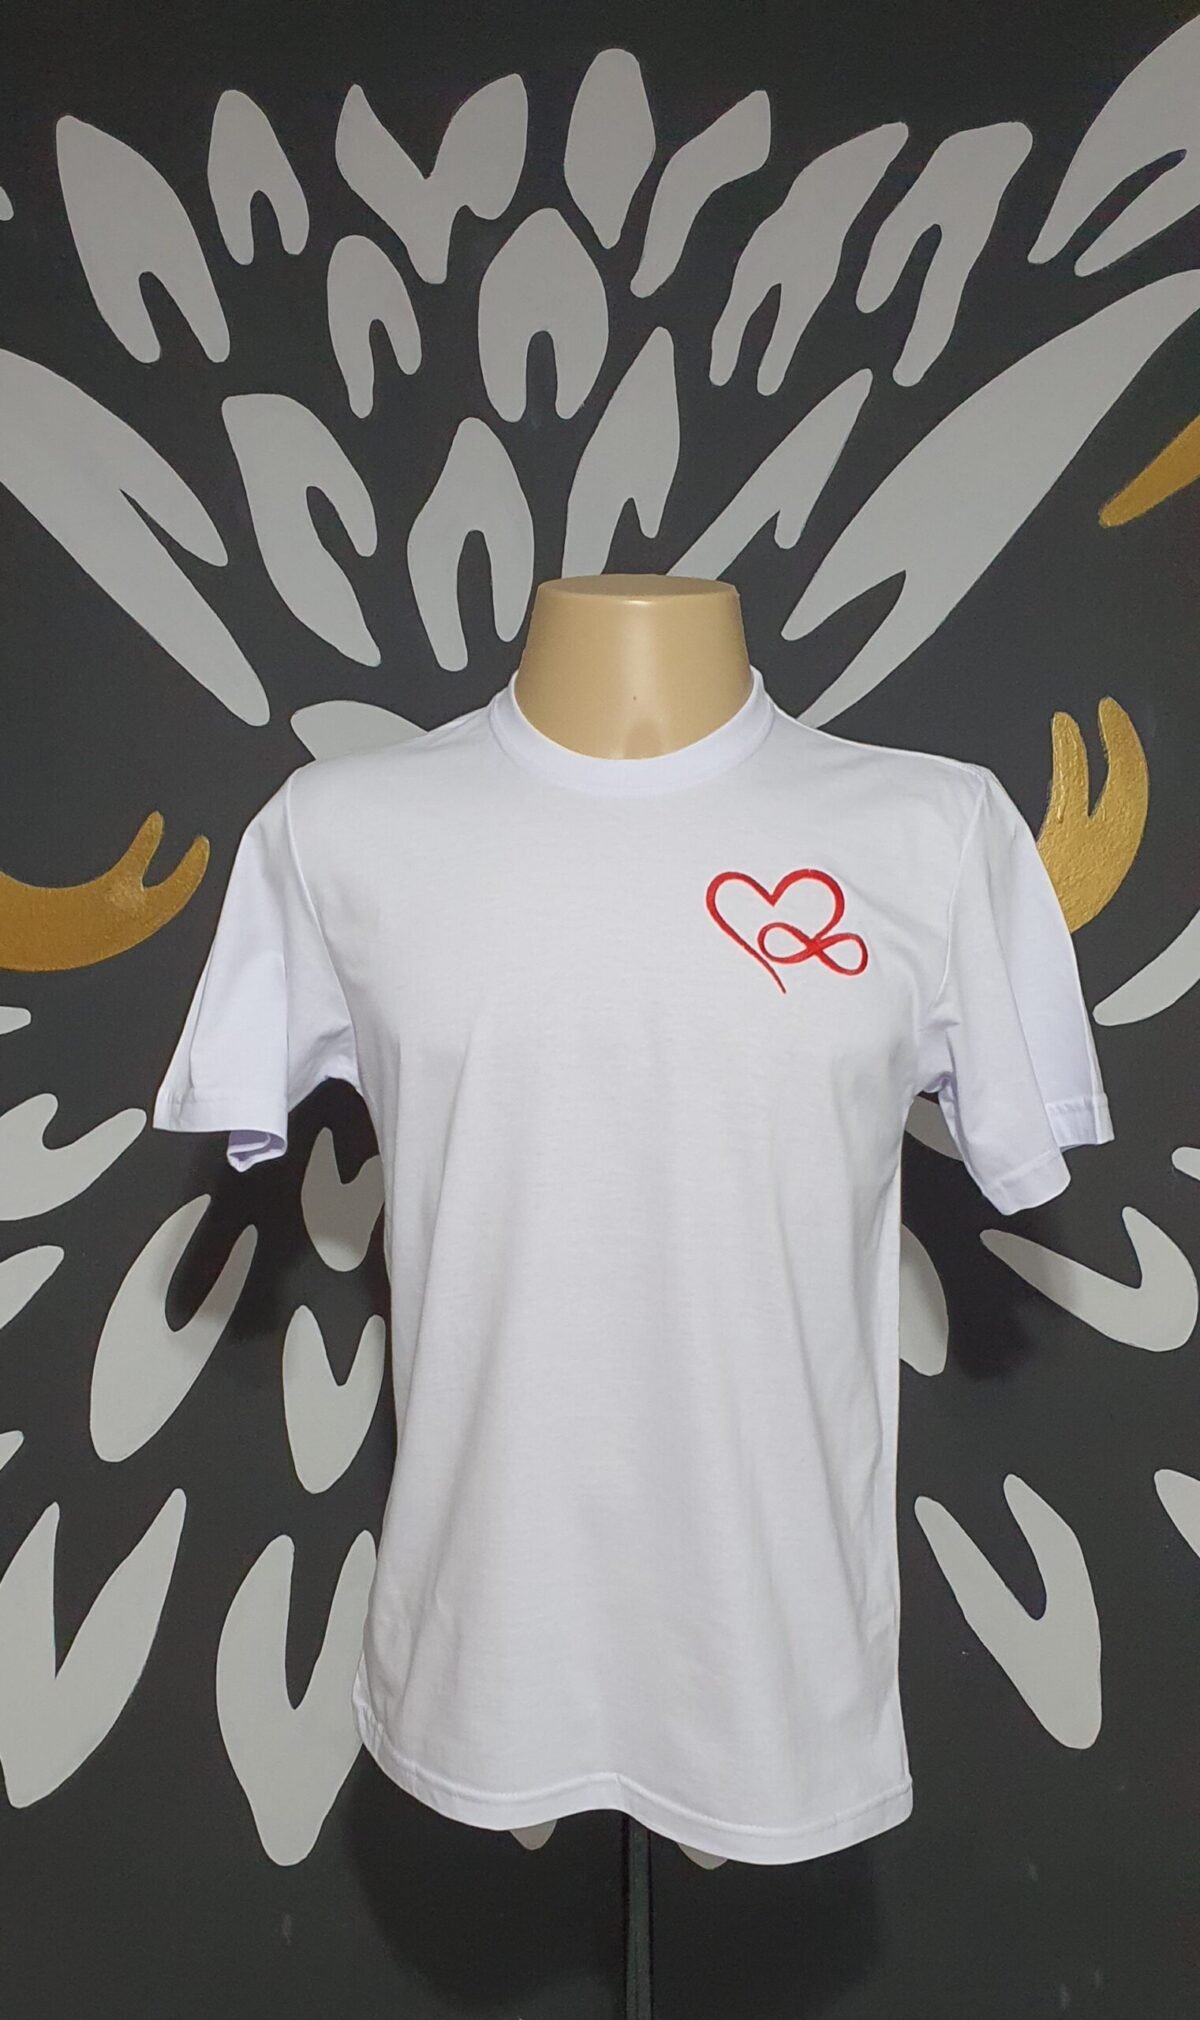 Camiseta Bordada "Love Forever" by Bordado & Cia - @bordado.cia